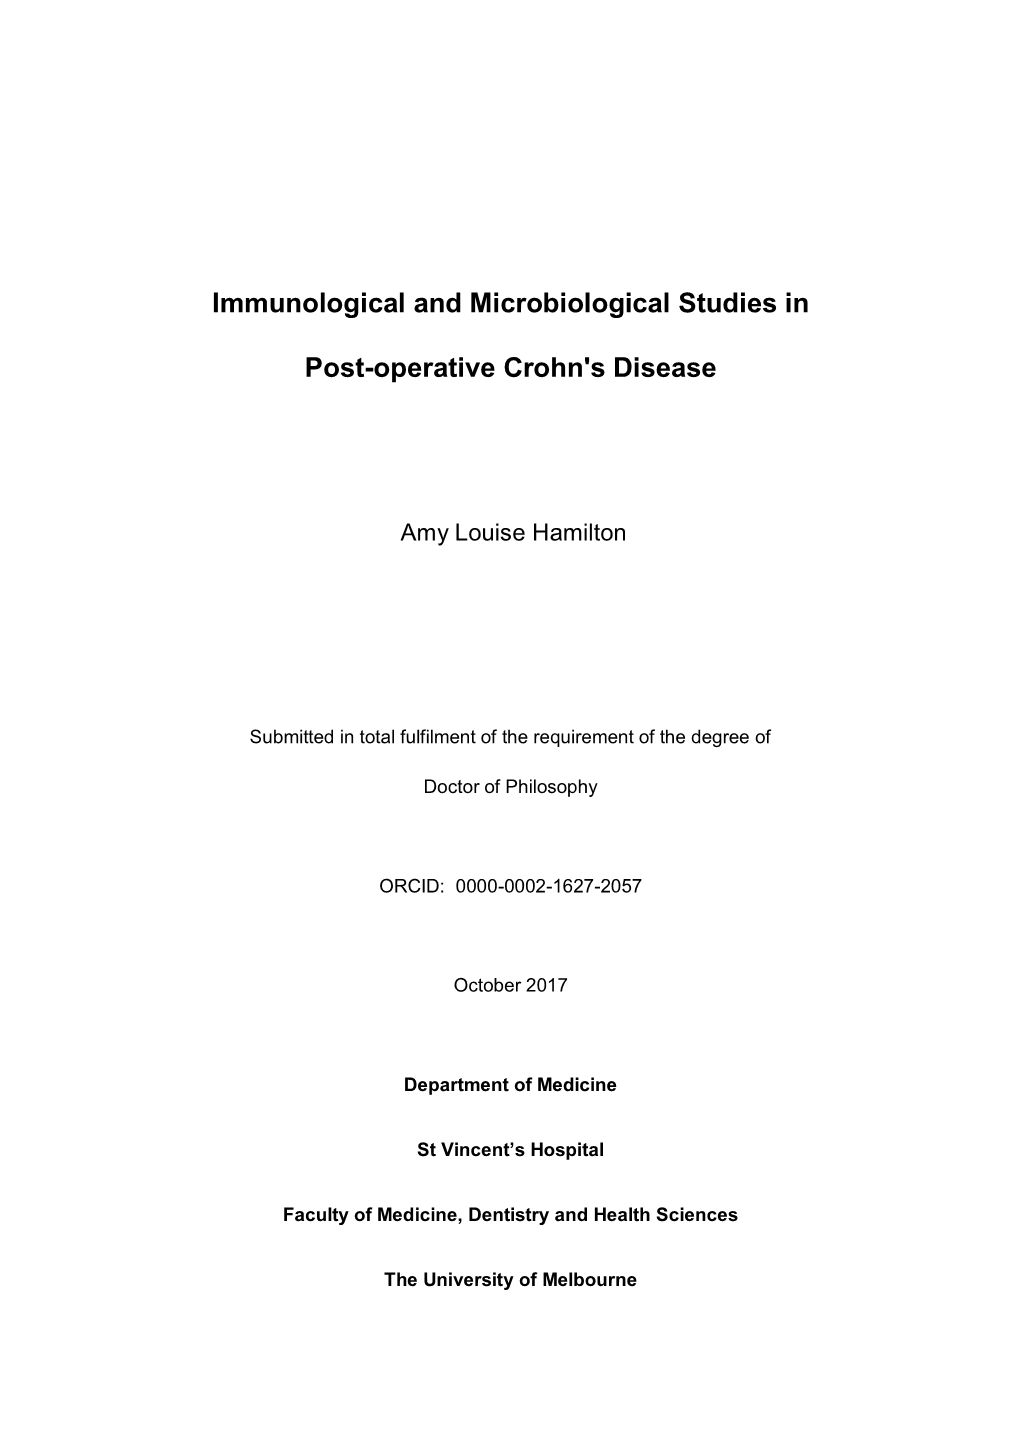 Immunological and Microbiological Studies in Post-Operative Crohn's Disease